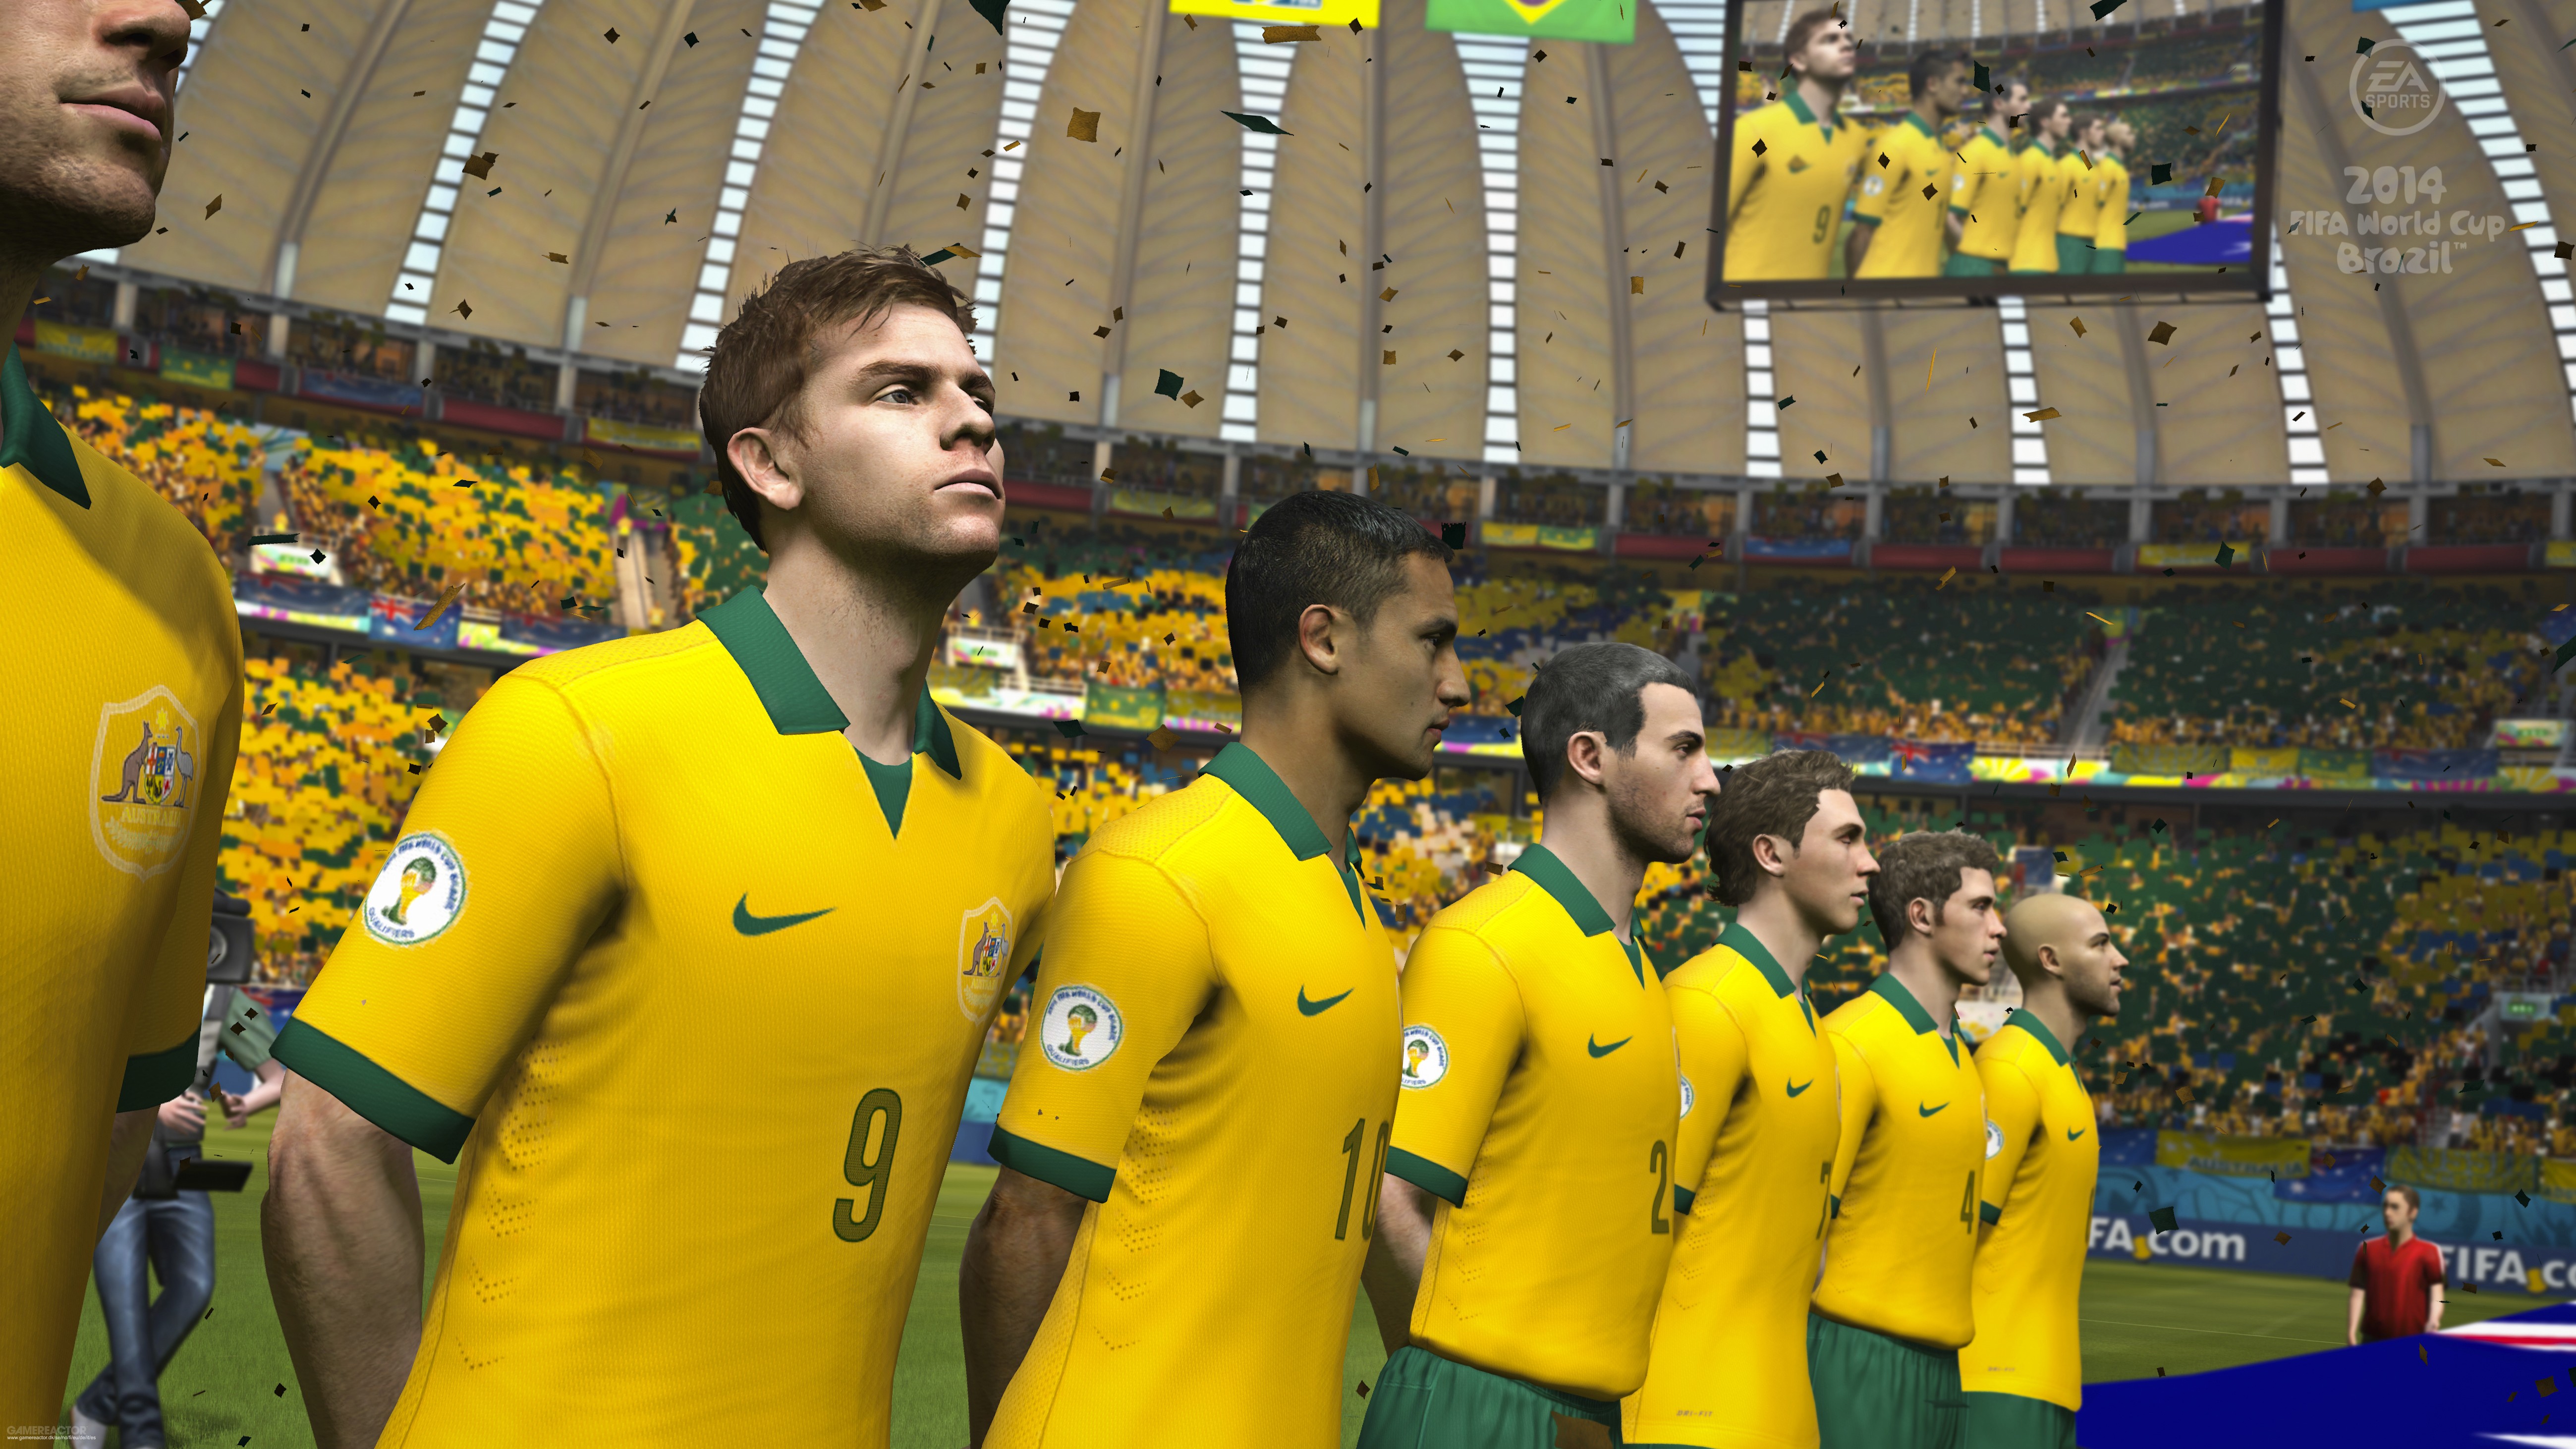 World cup 2. ФИФА 14 ворлд кап Бразилия. FIFA 14 World Cup Brazil. ФИФА 14 ворлд кап 2014 Бразилия. 2014 FIFA World Cup Brazil для Xbox 360.